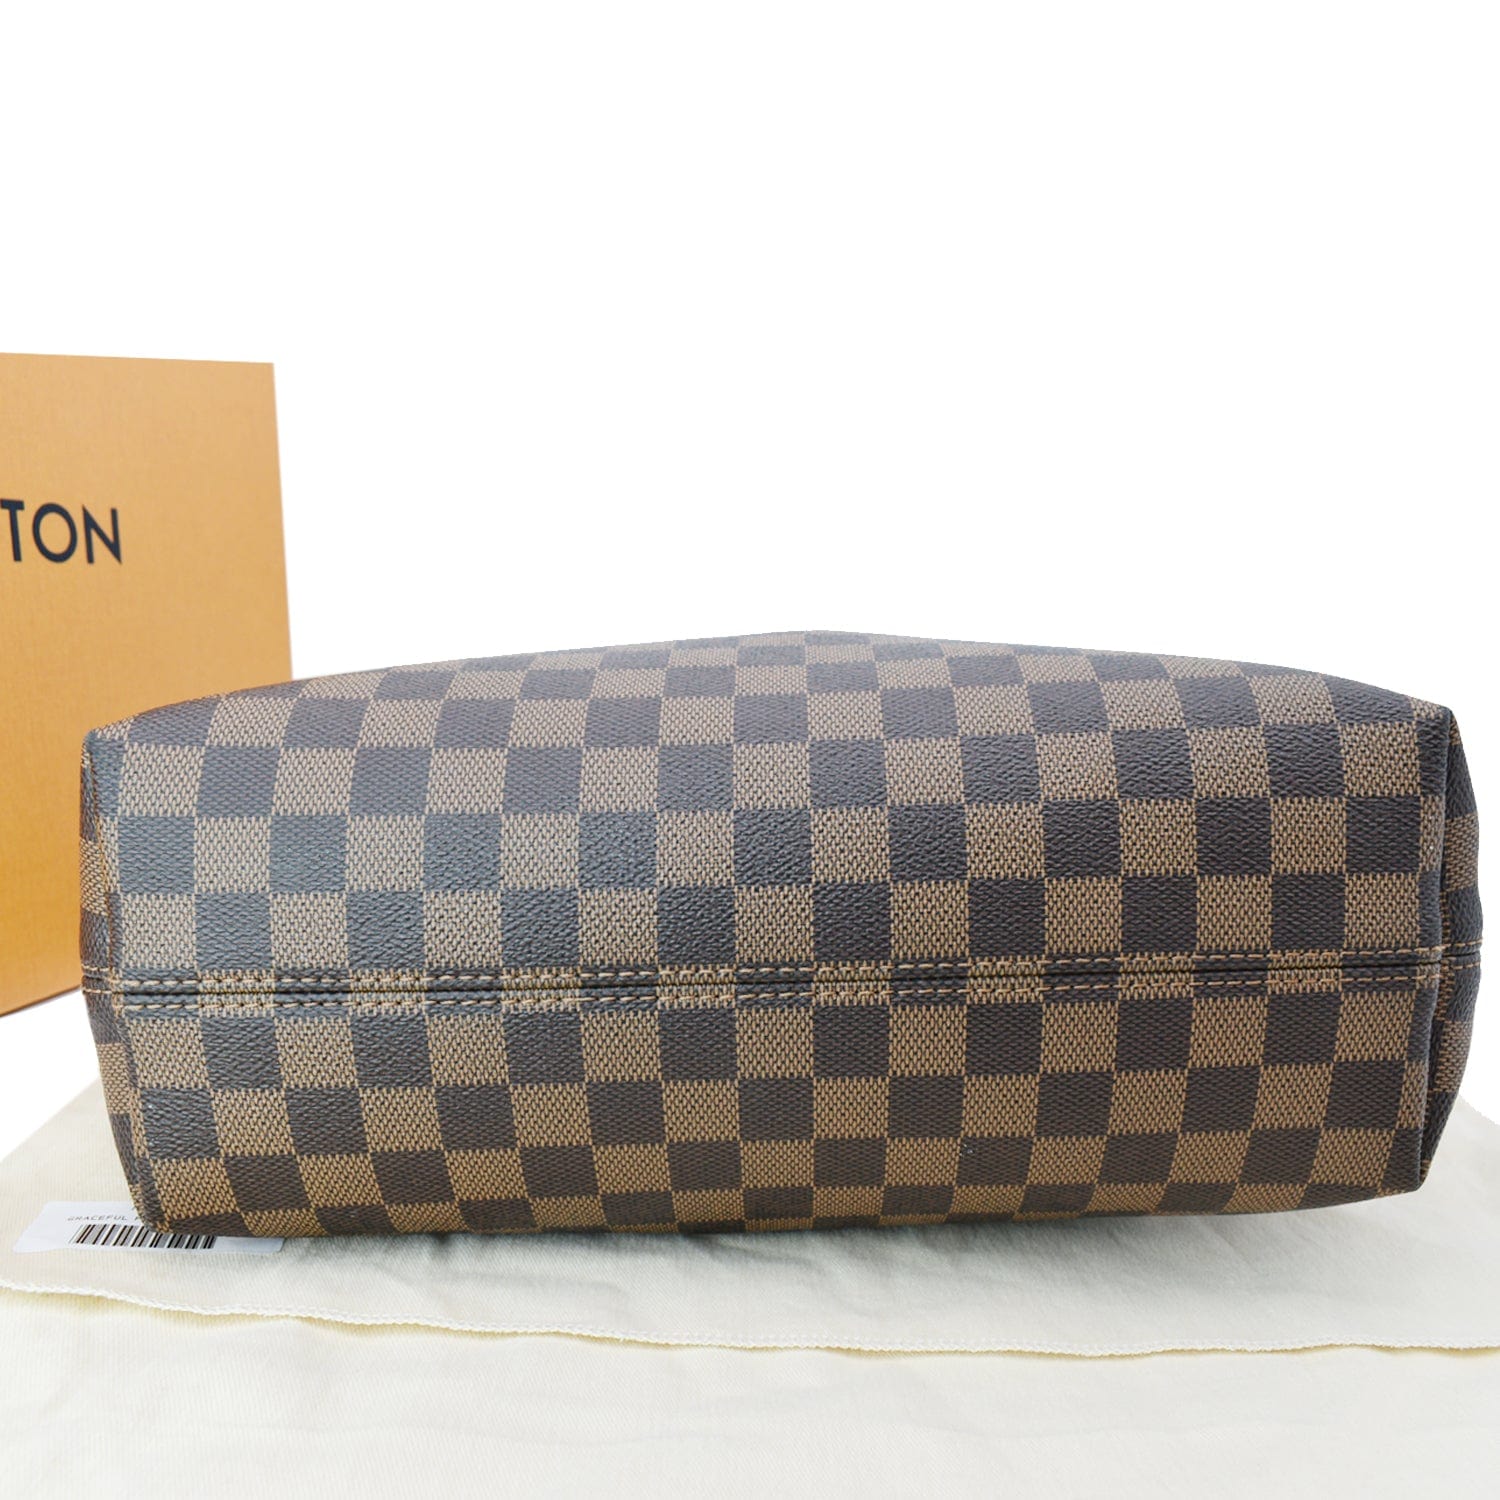 Louis Vuitton Damier Ebene shoulder Graceful PM handbag